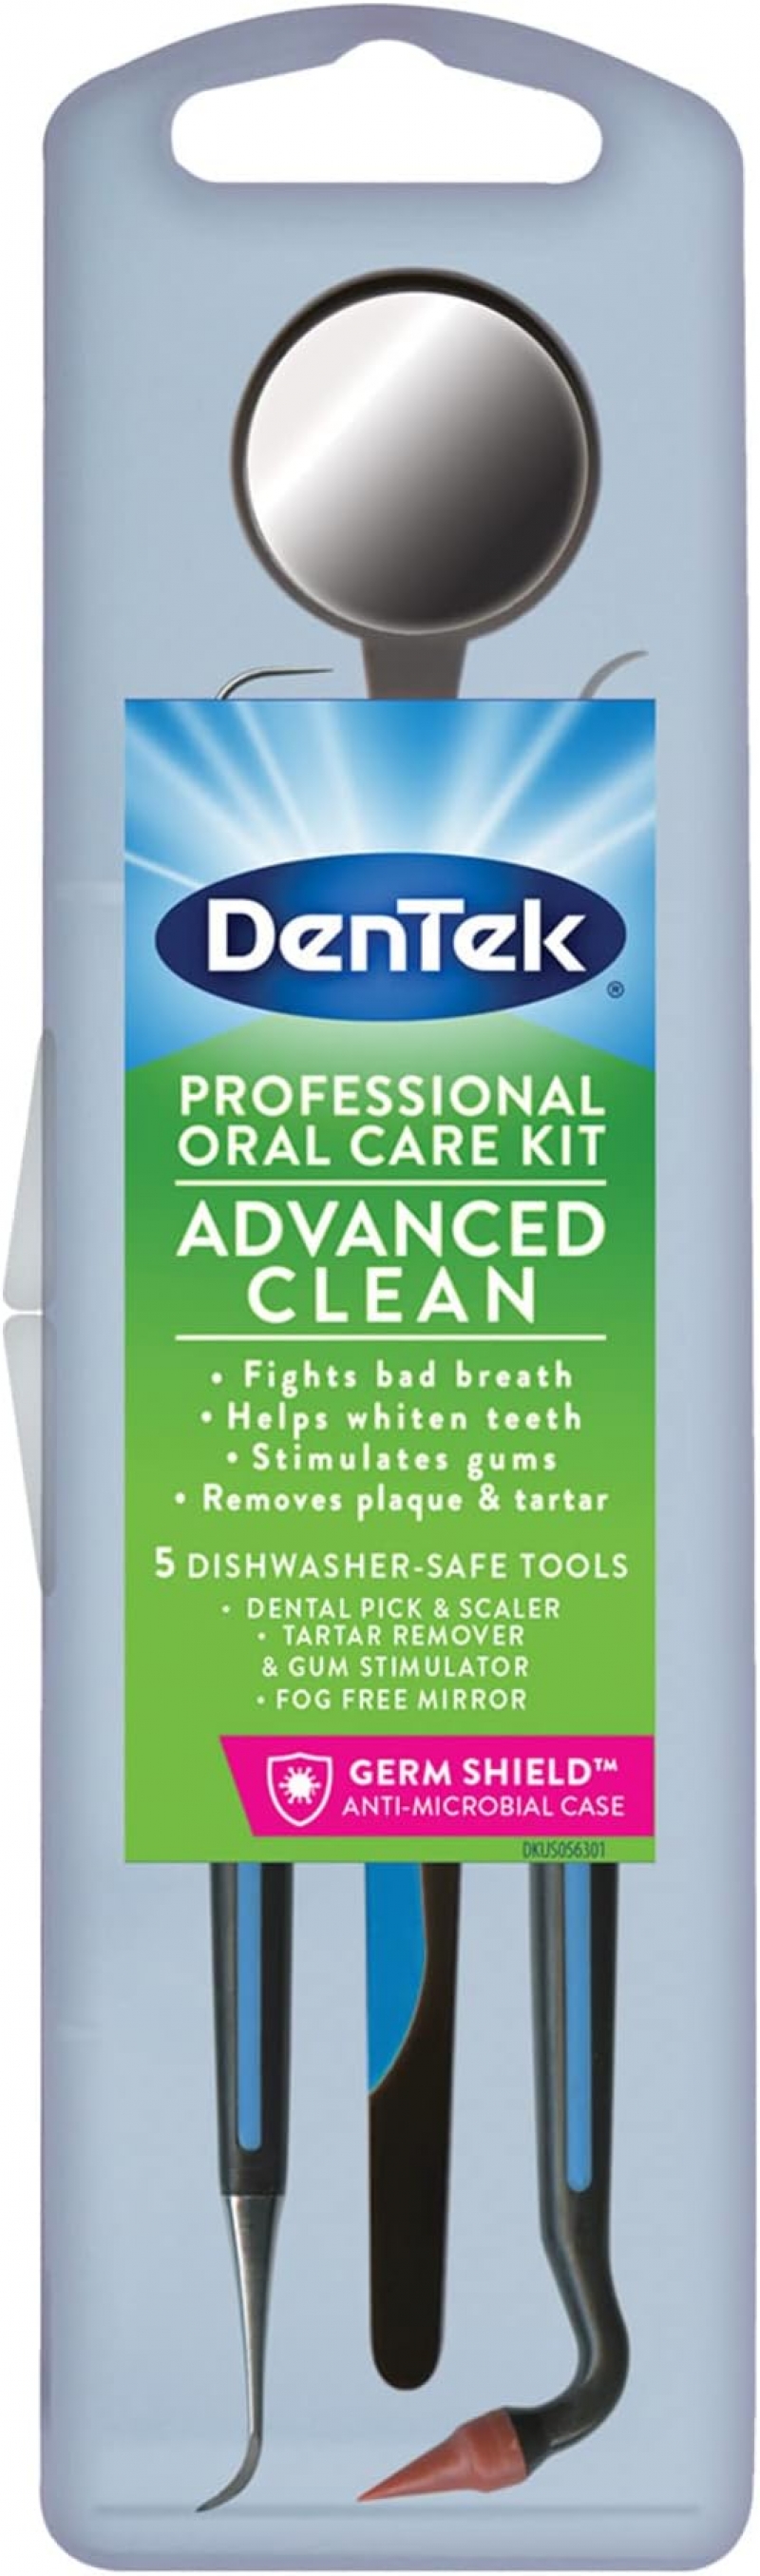 ihocon: DenTek Professional Oral Care Kit, Advanced Clean- Portable, Multiple Tips, Dental Pick, Scaler, Stimulator, and Dental Mirror 專業牙齒護理套件